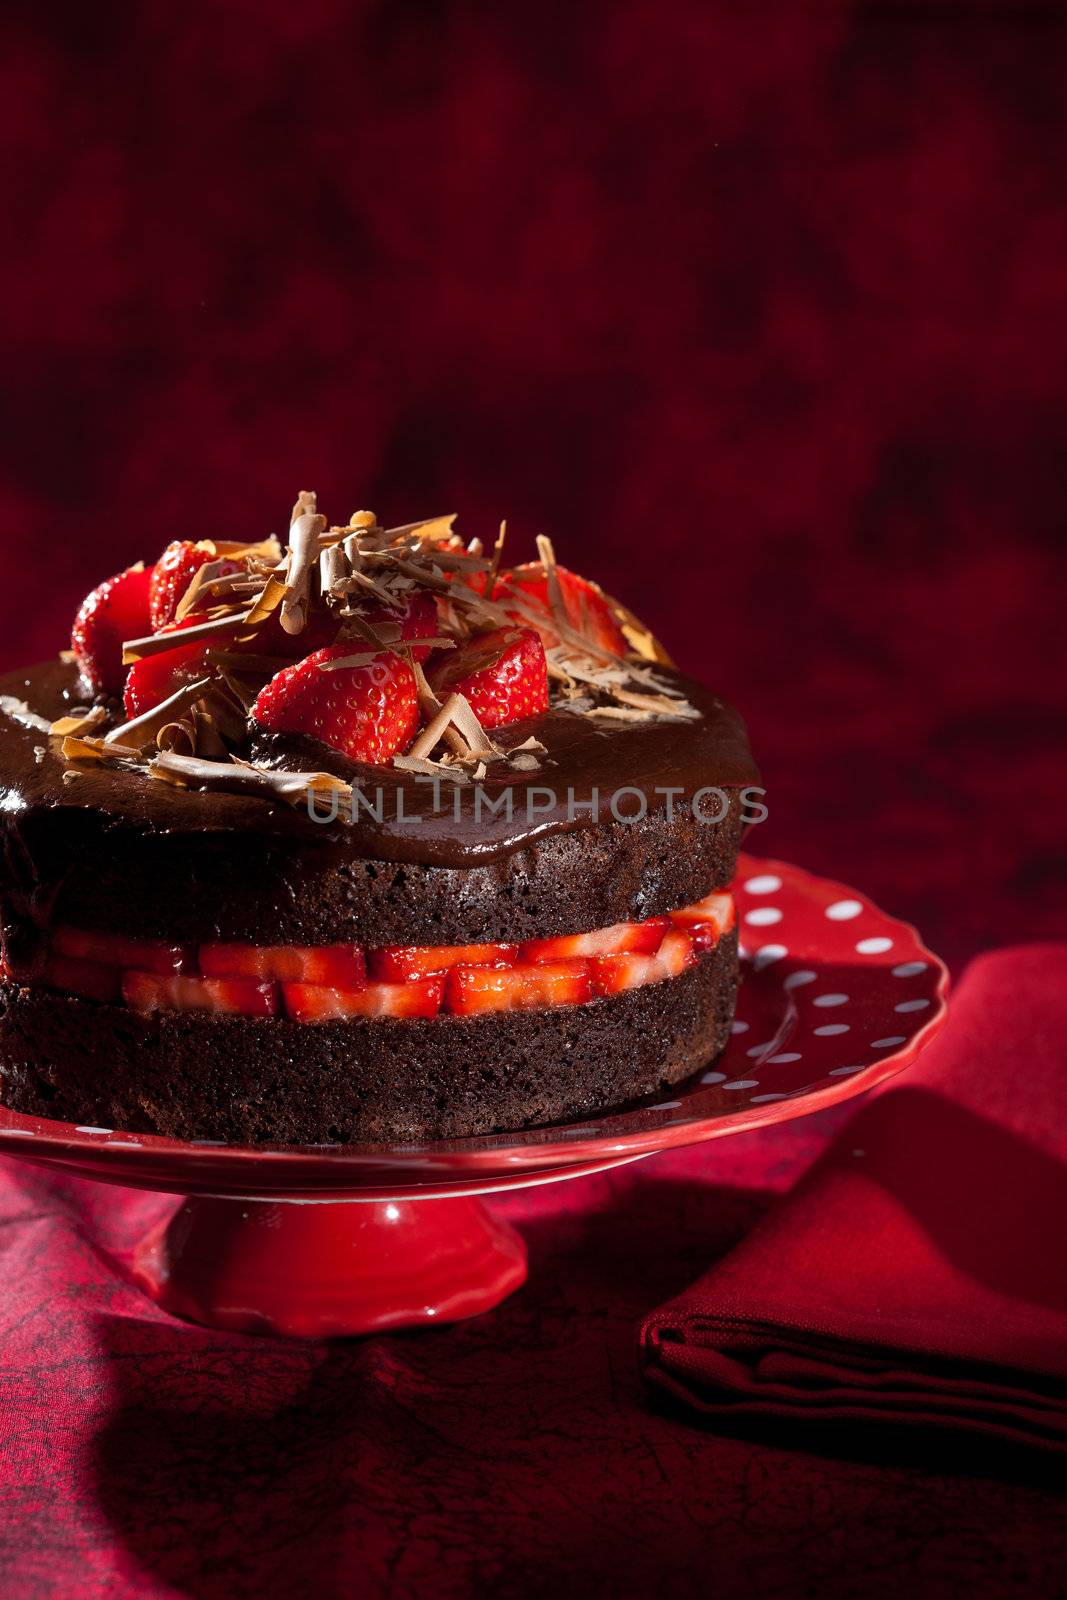 Delicious chocolate strawberry cake with chocolate ganache